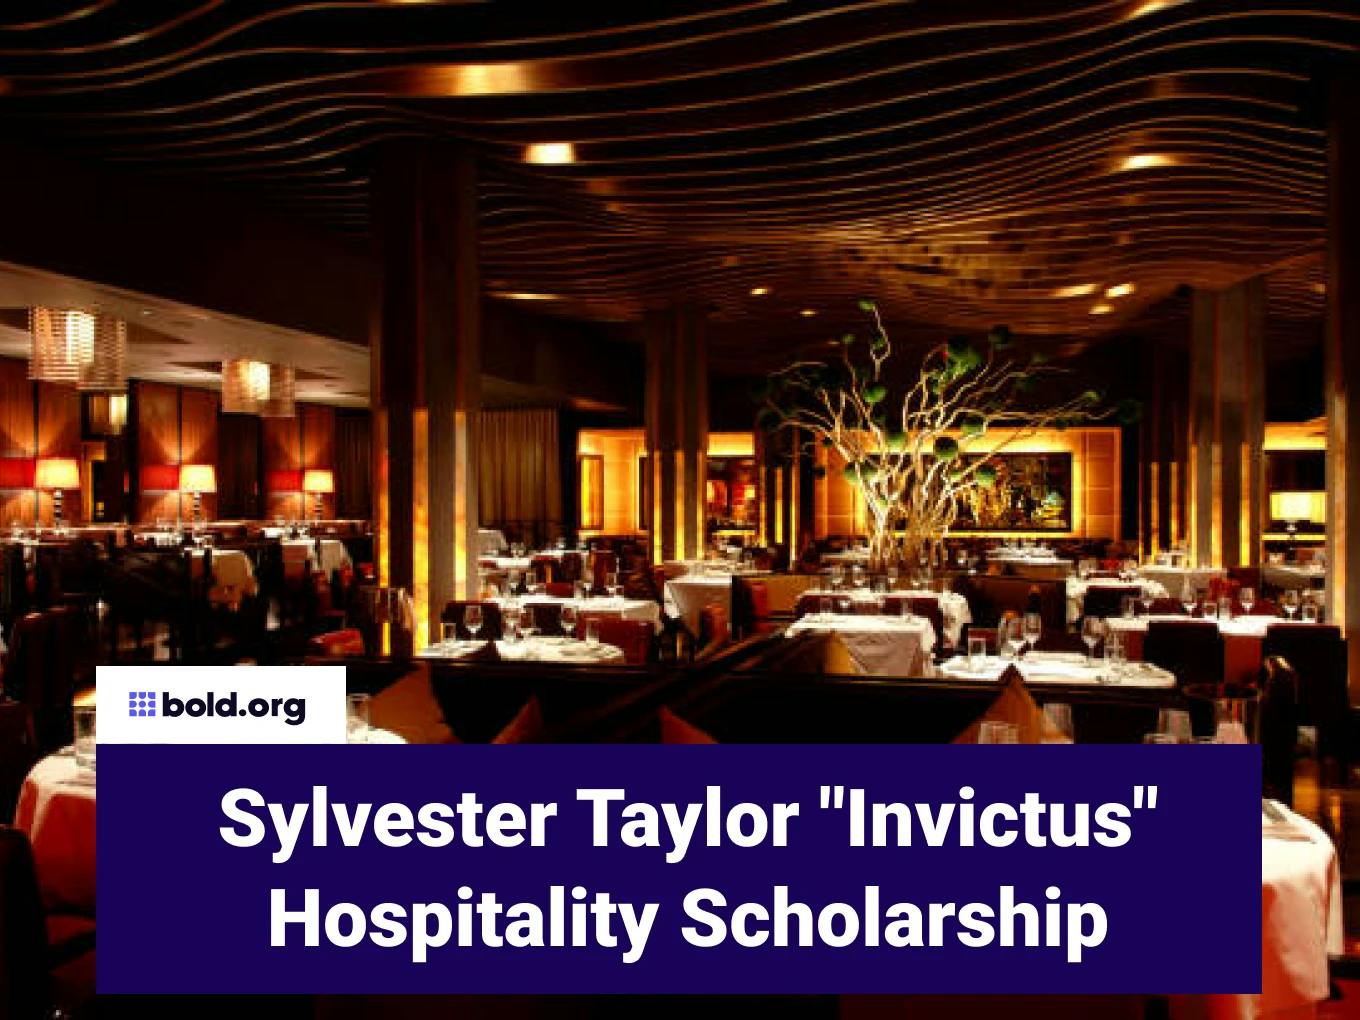 Sylvester Taylor "Invictus" Hospitality Scholarship